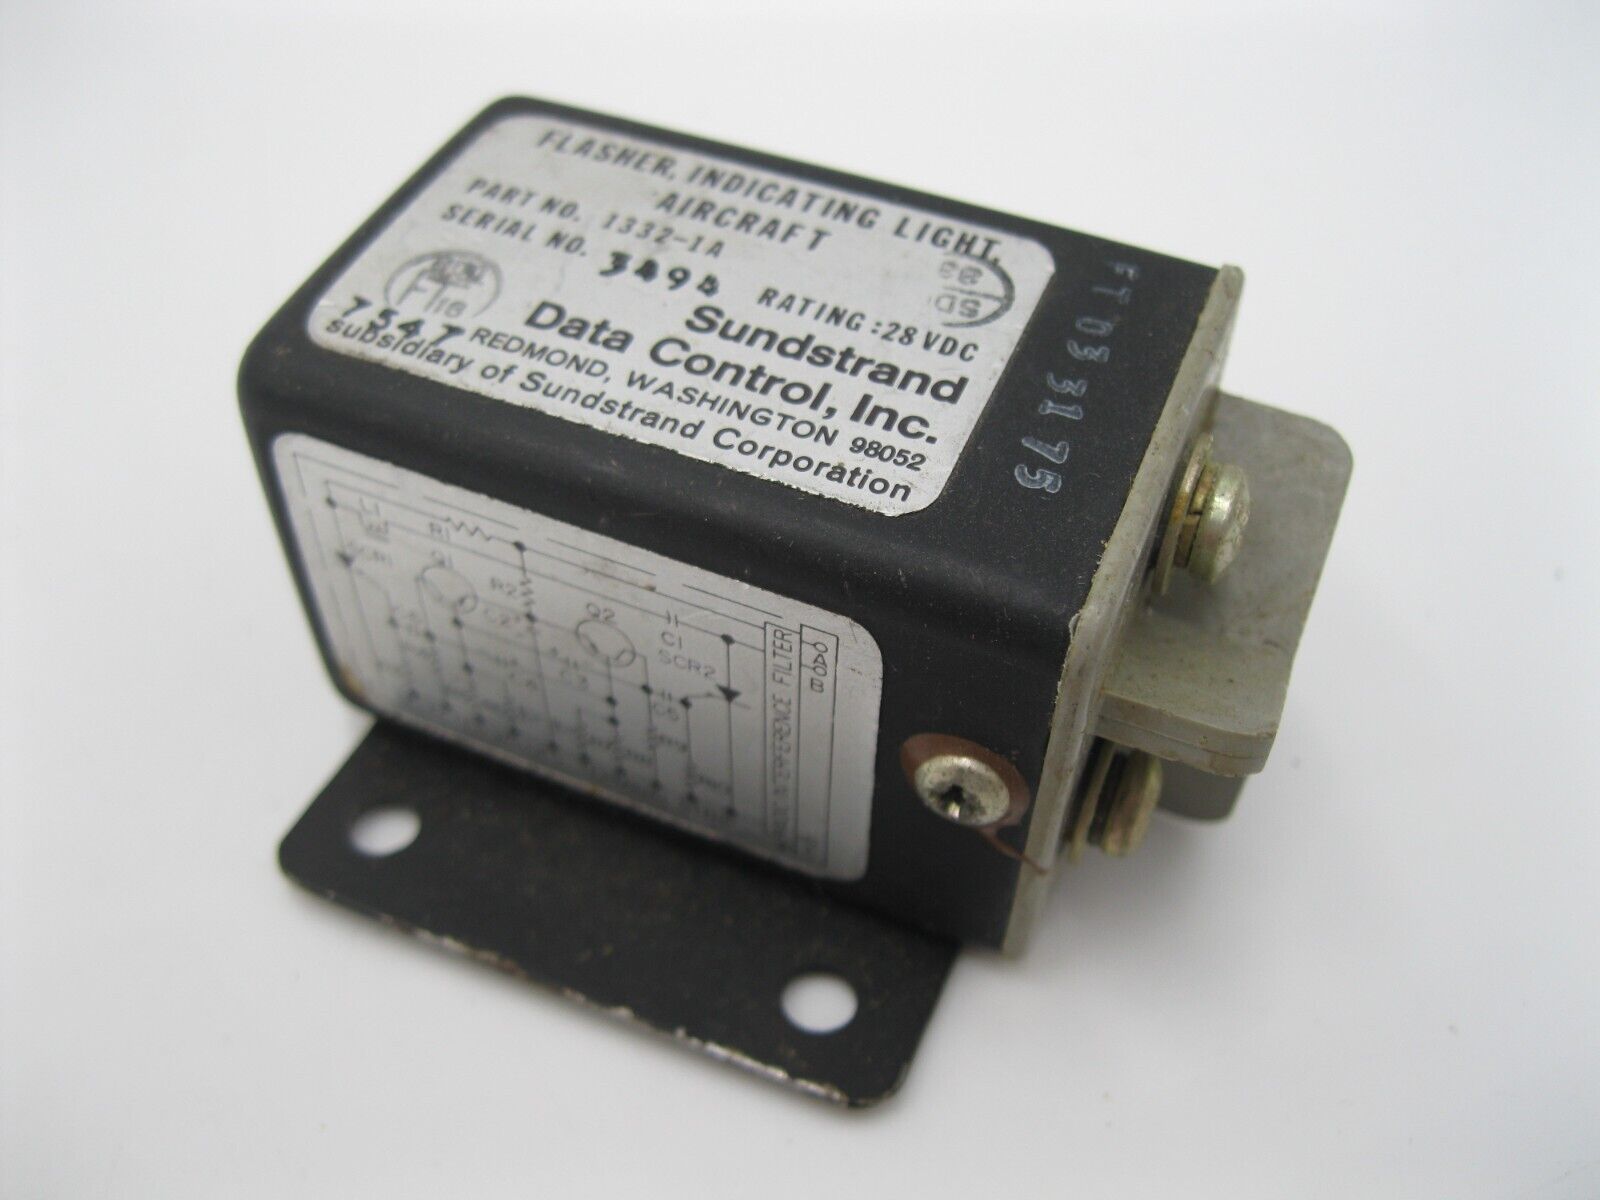 SUNDSTRAND DATA CONTROL INC FLASHER/INDICATING LIGHT 28VDC PN: 1332-1A